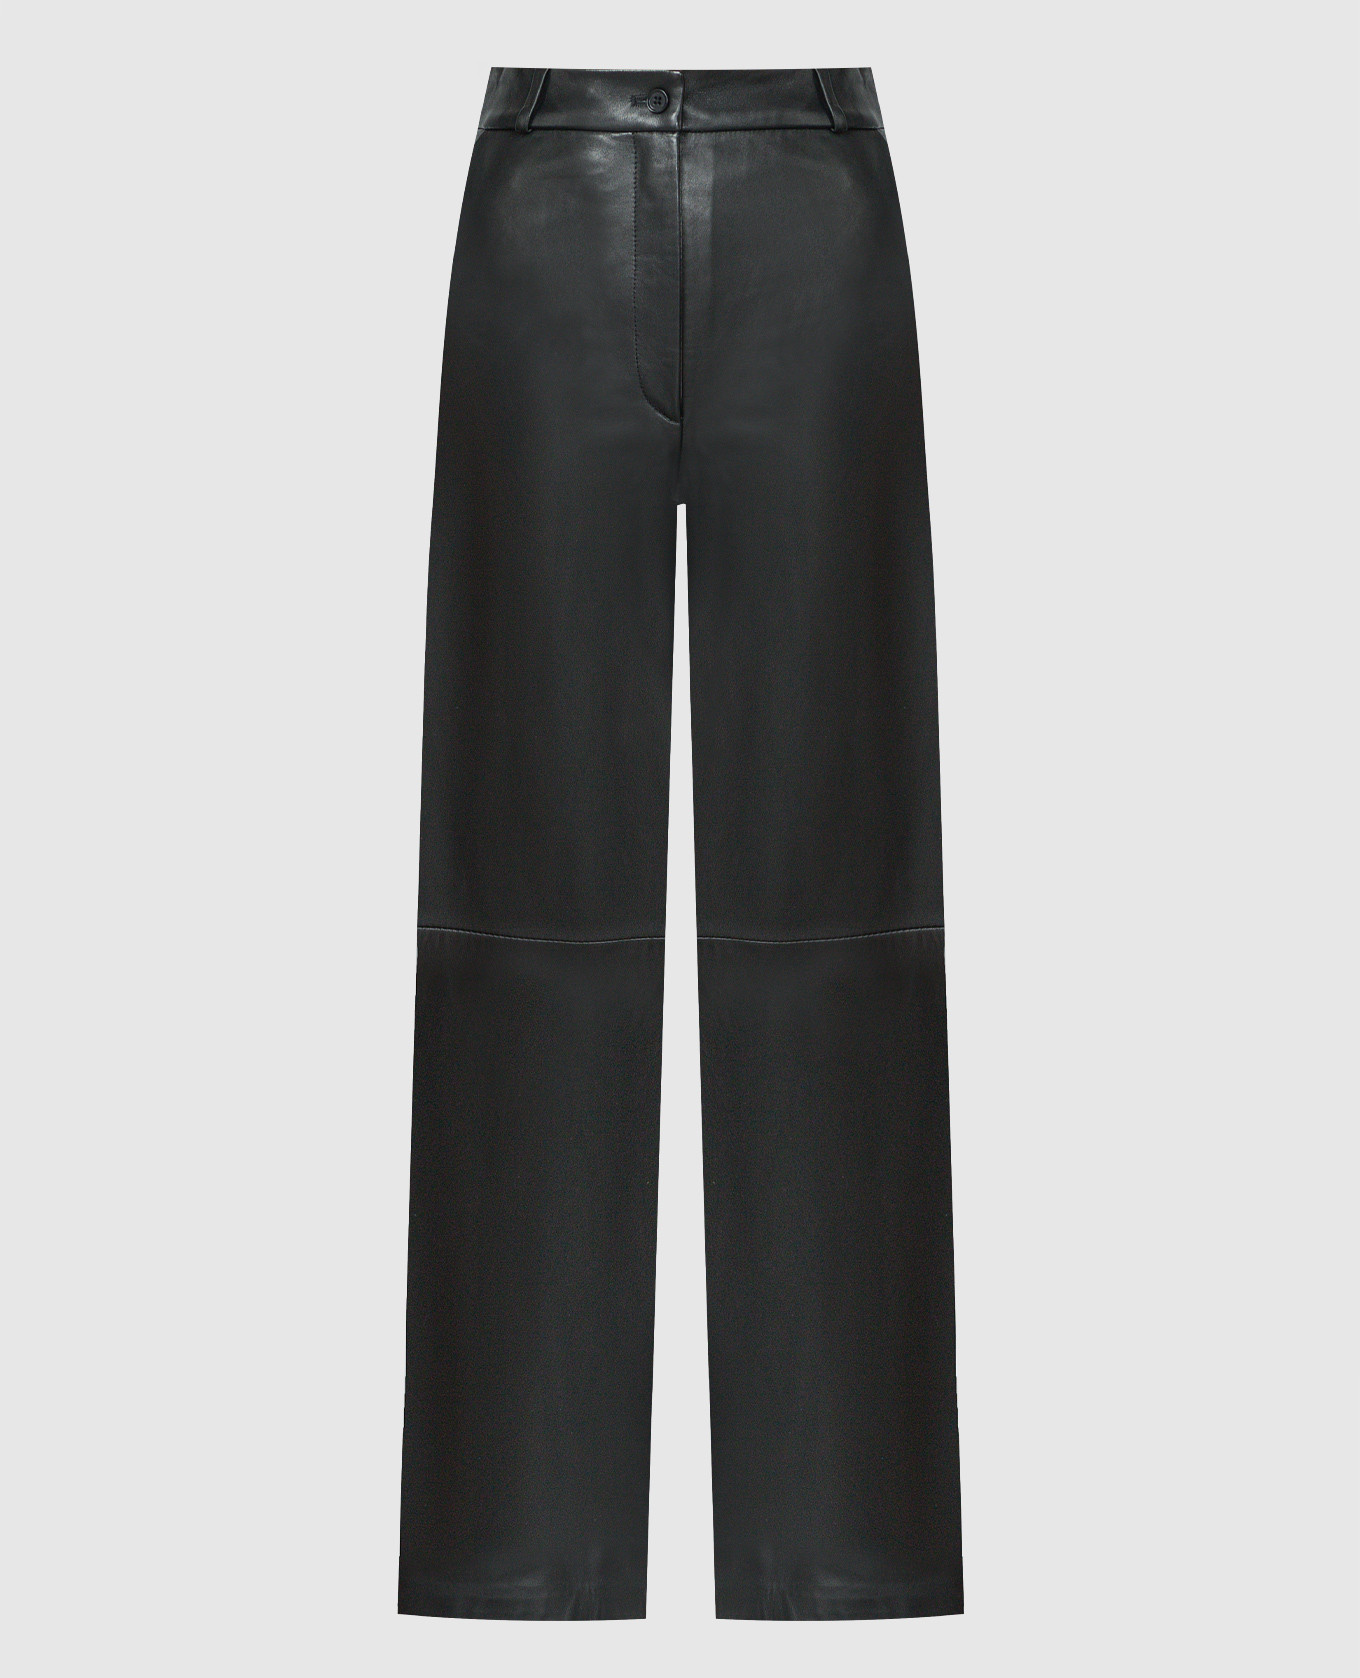 Black leather pants NORO